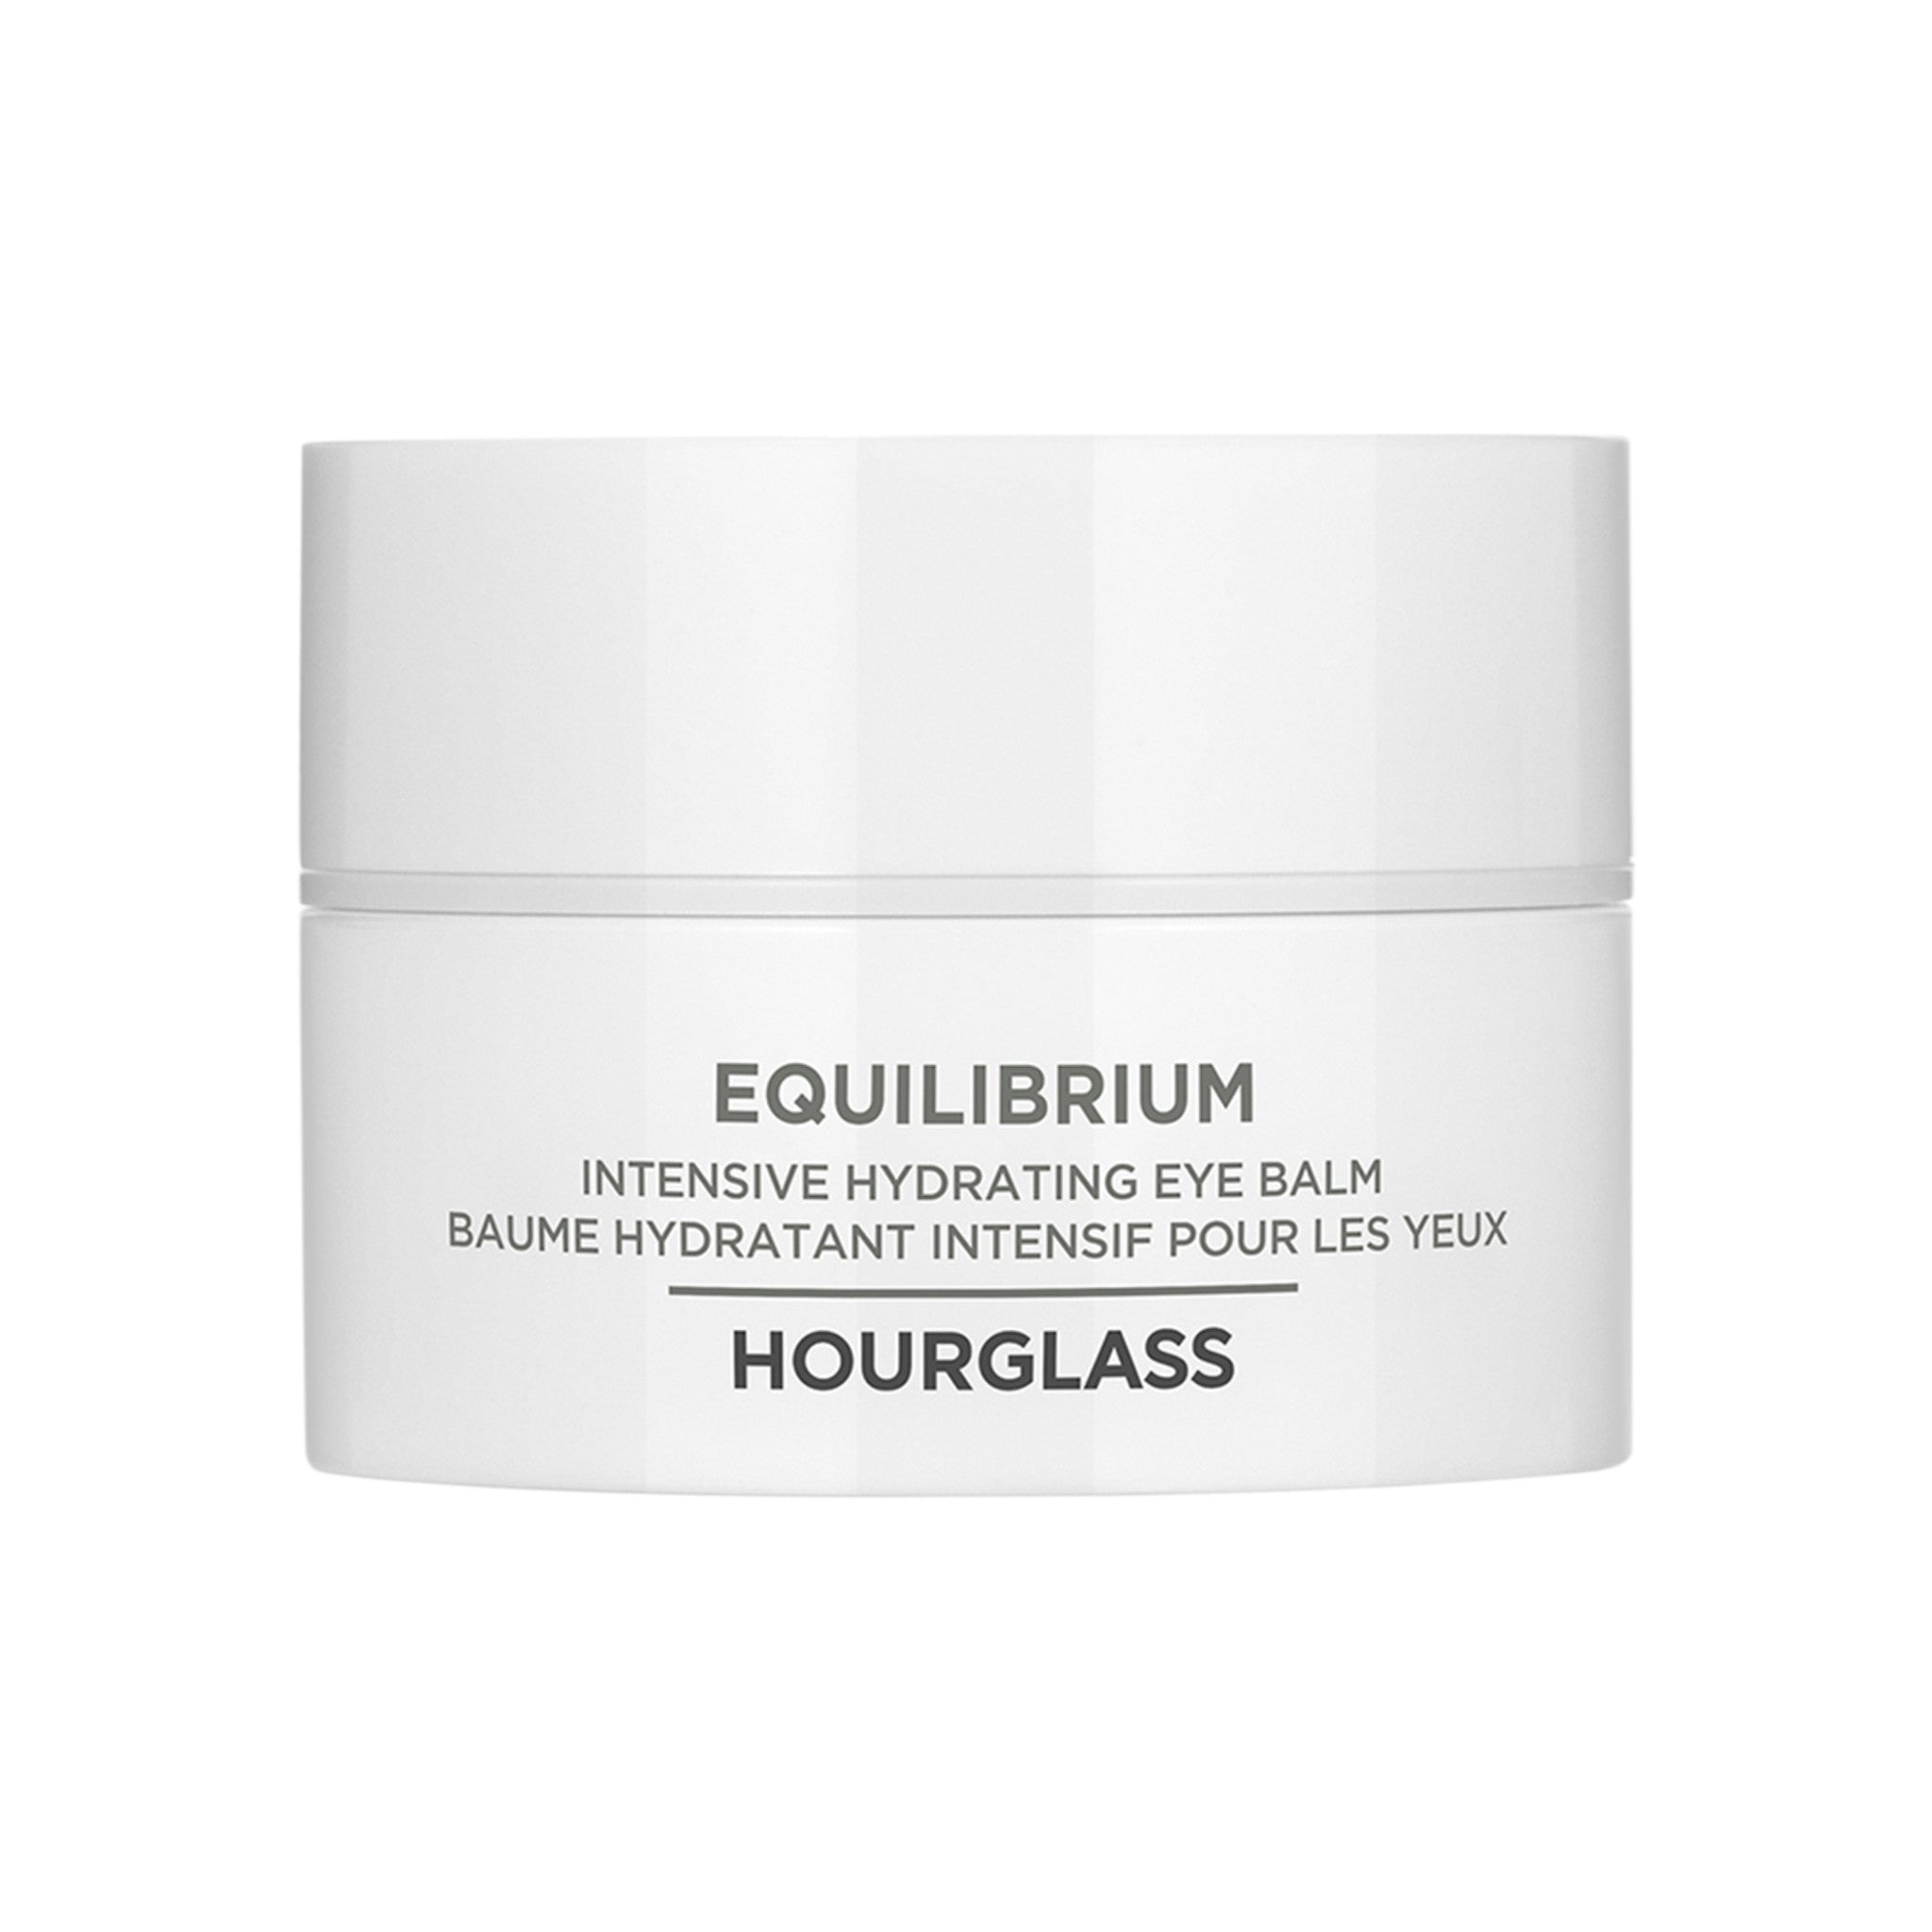 Hourglass Equilibrium Intensive Hydrating Eye Balm main image.